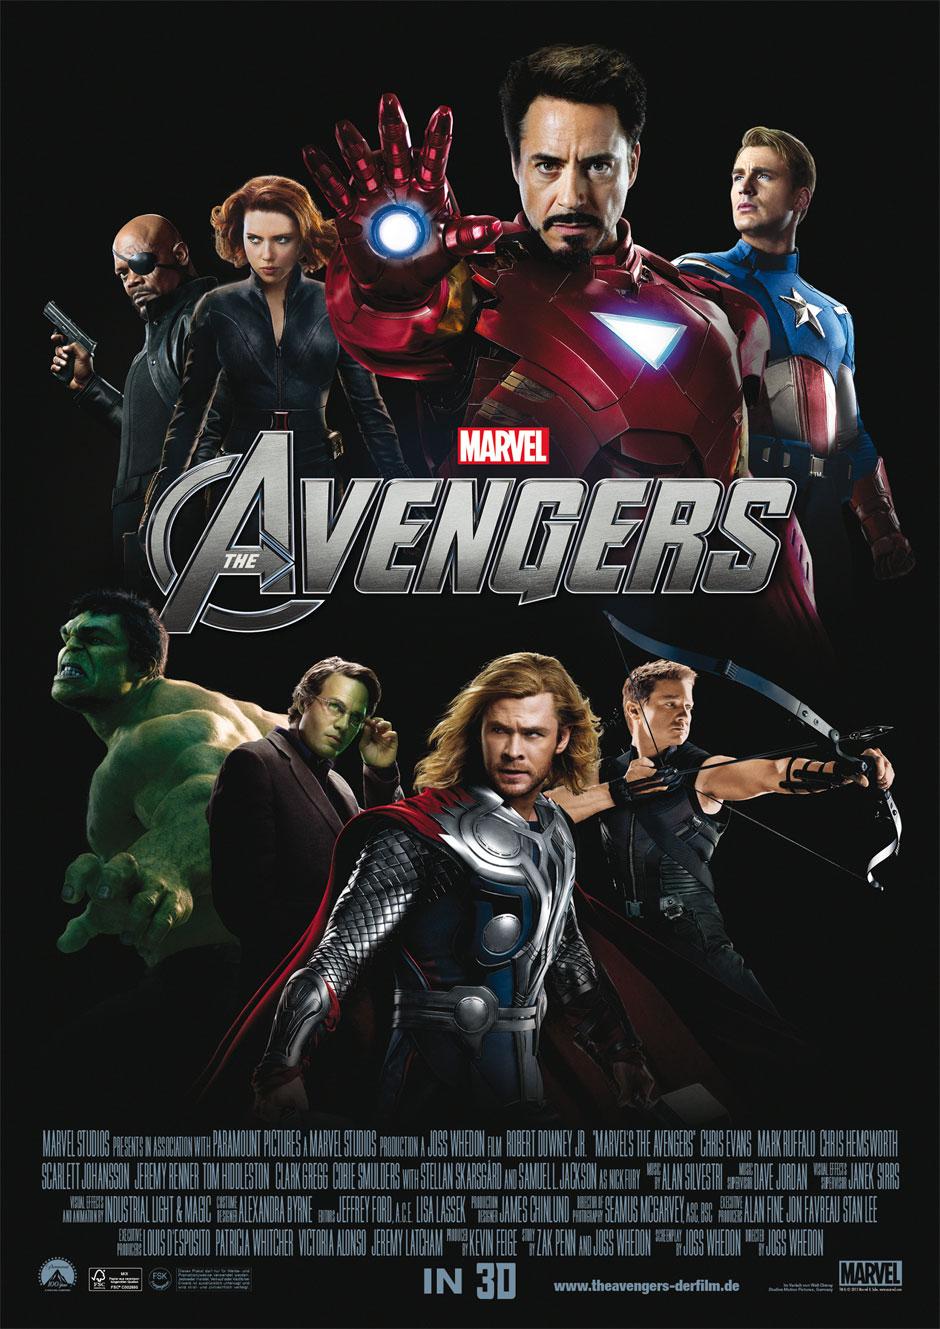  The Avengers - 2012